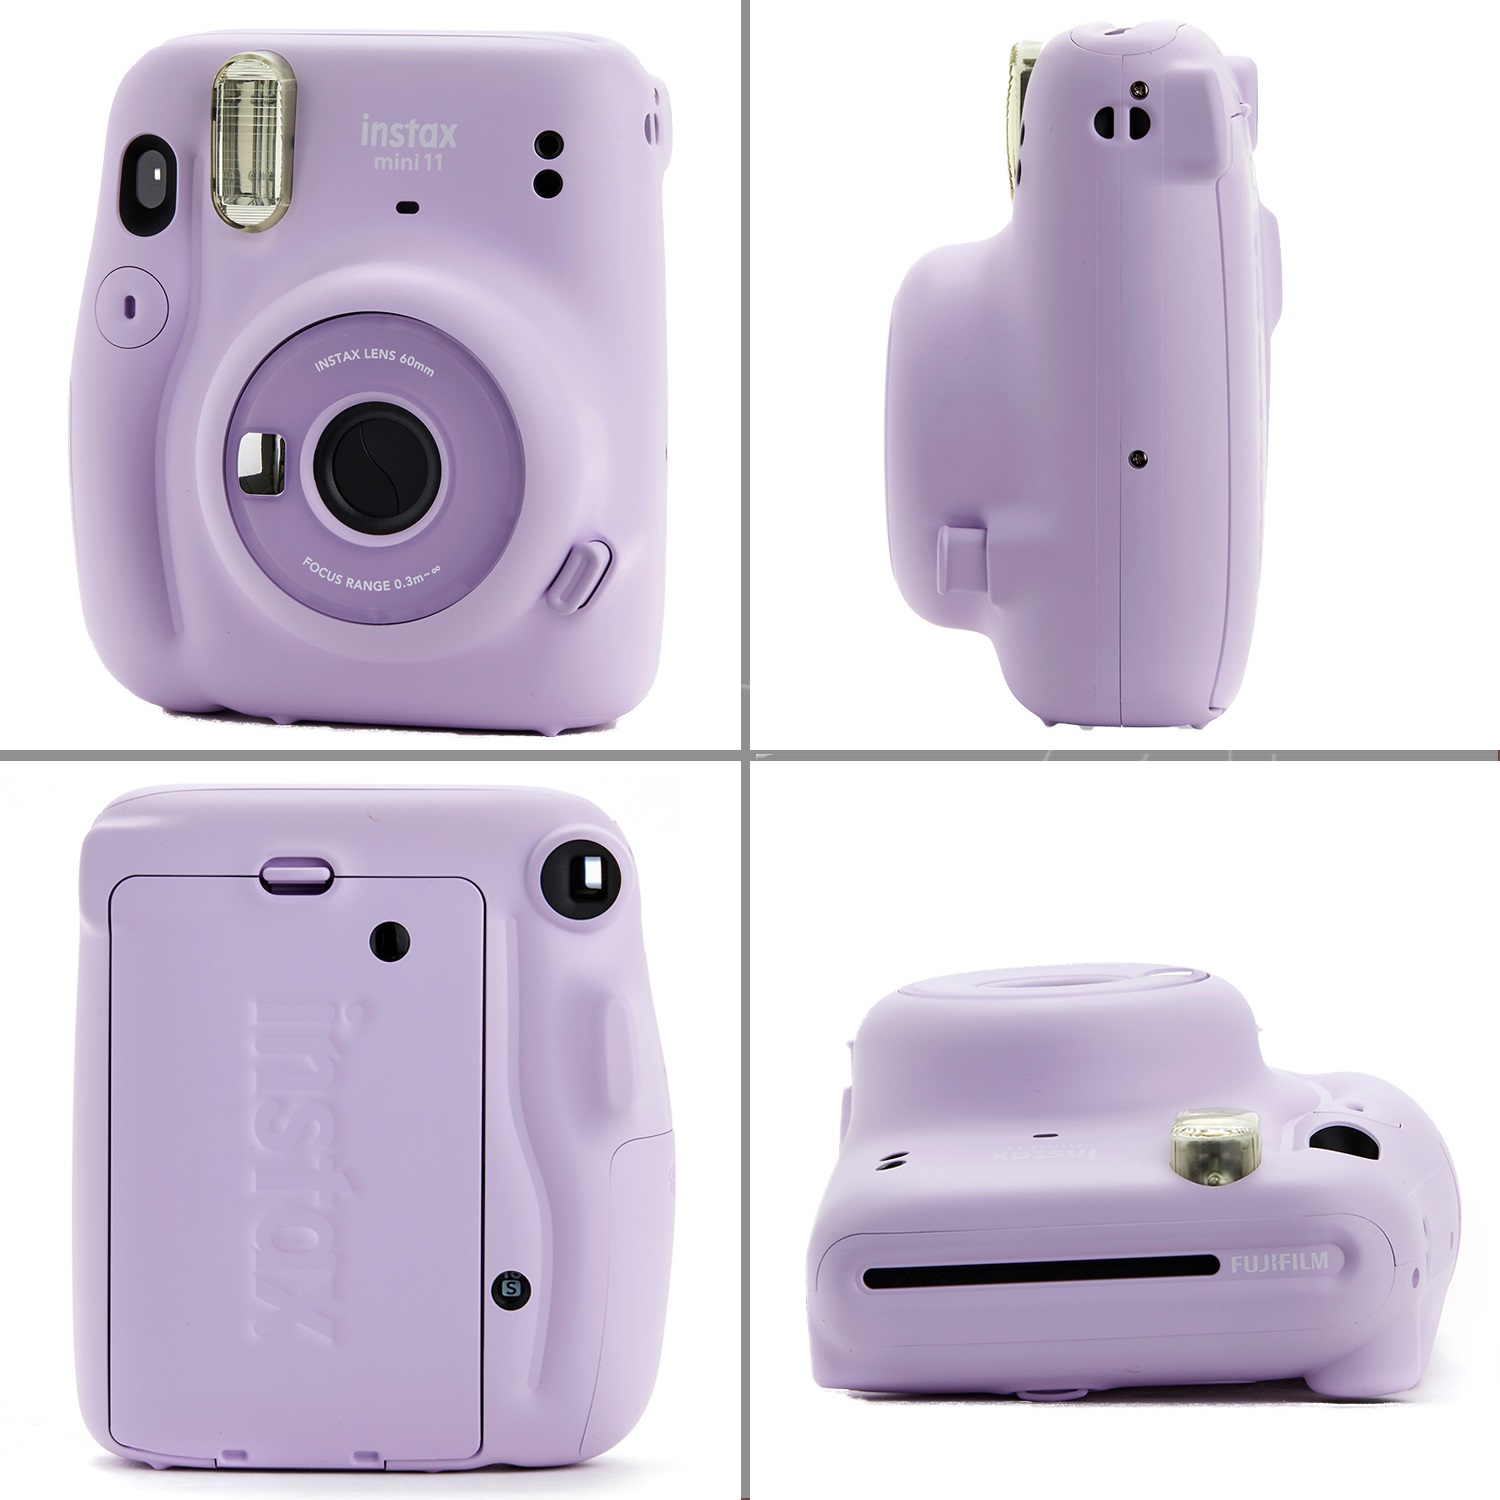 Fujifilm Instax Mini 11 Instant Camera - Lilac Purple (16654803), Holographic Purple Case, Holographic Purple Album, Instant Film Pack